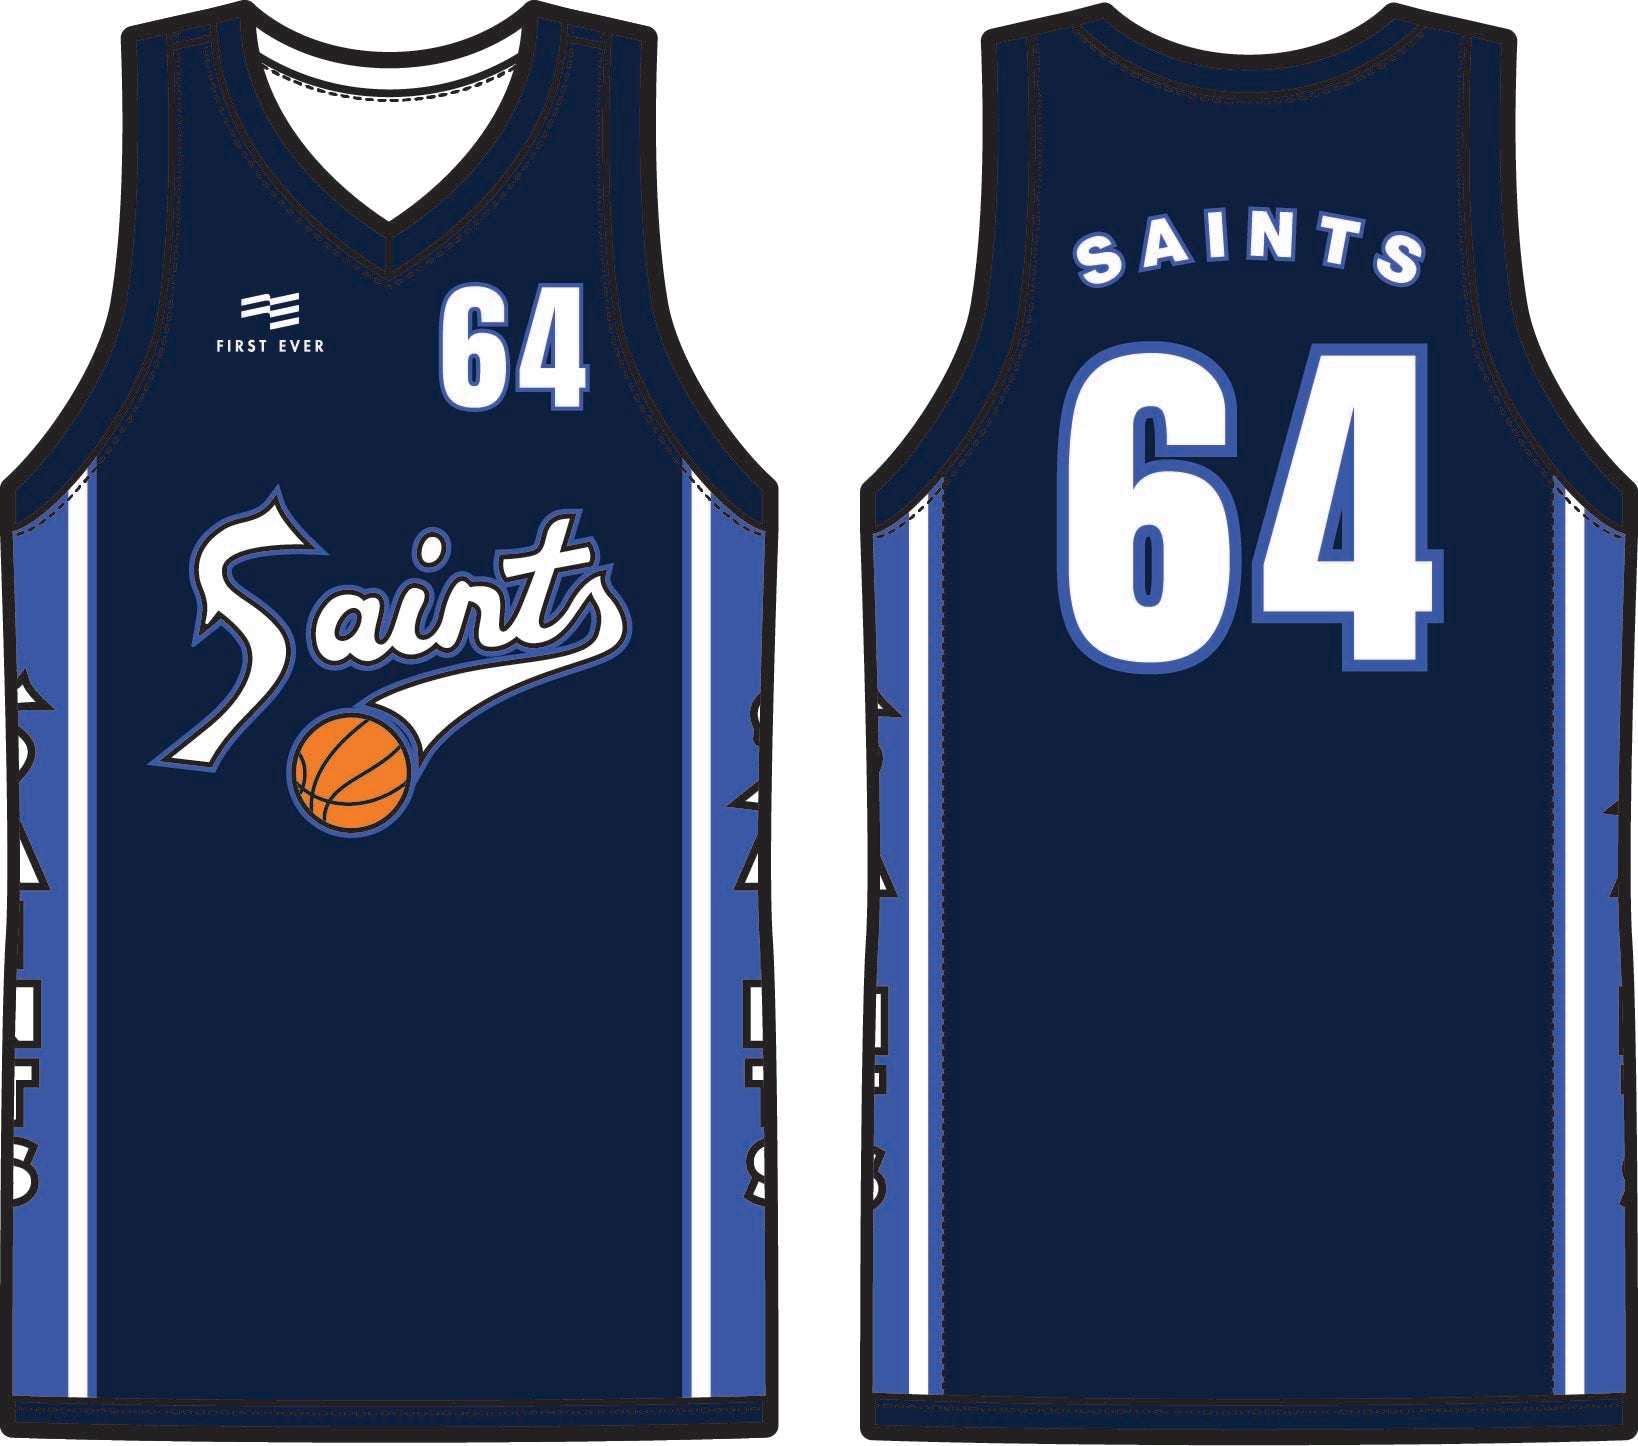 Saints Basketball Club Reversible Playing Jersey